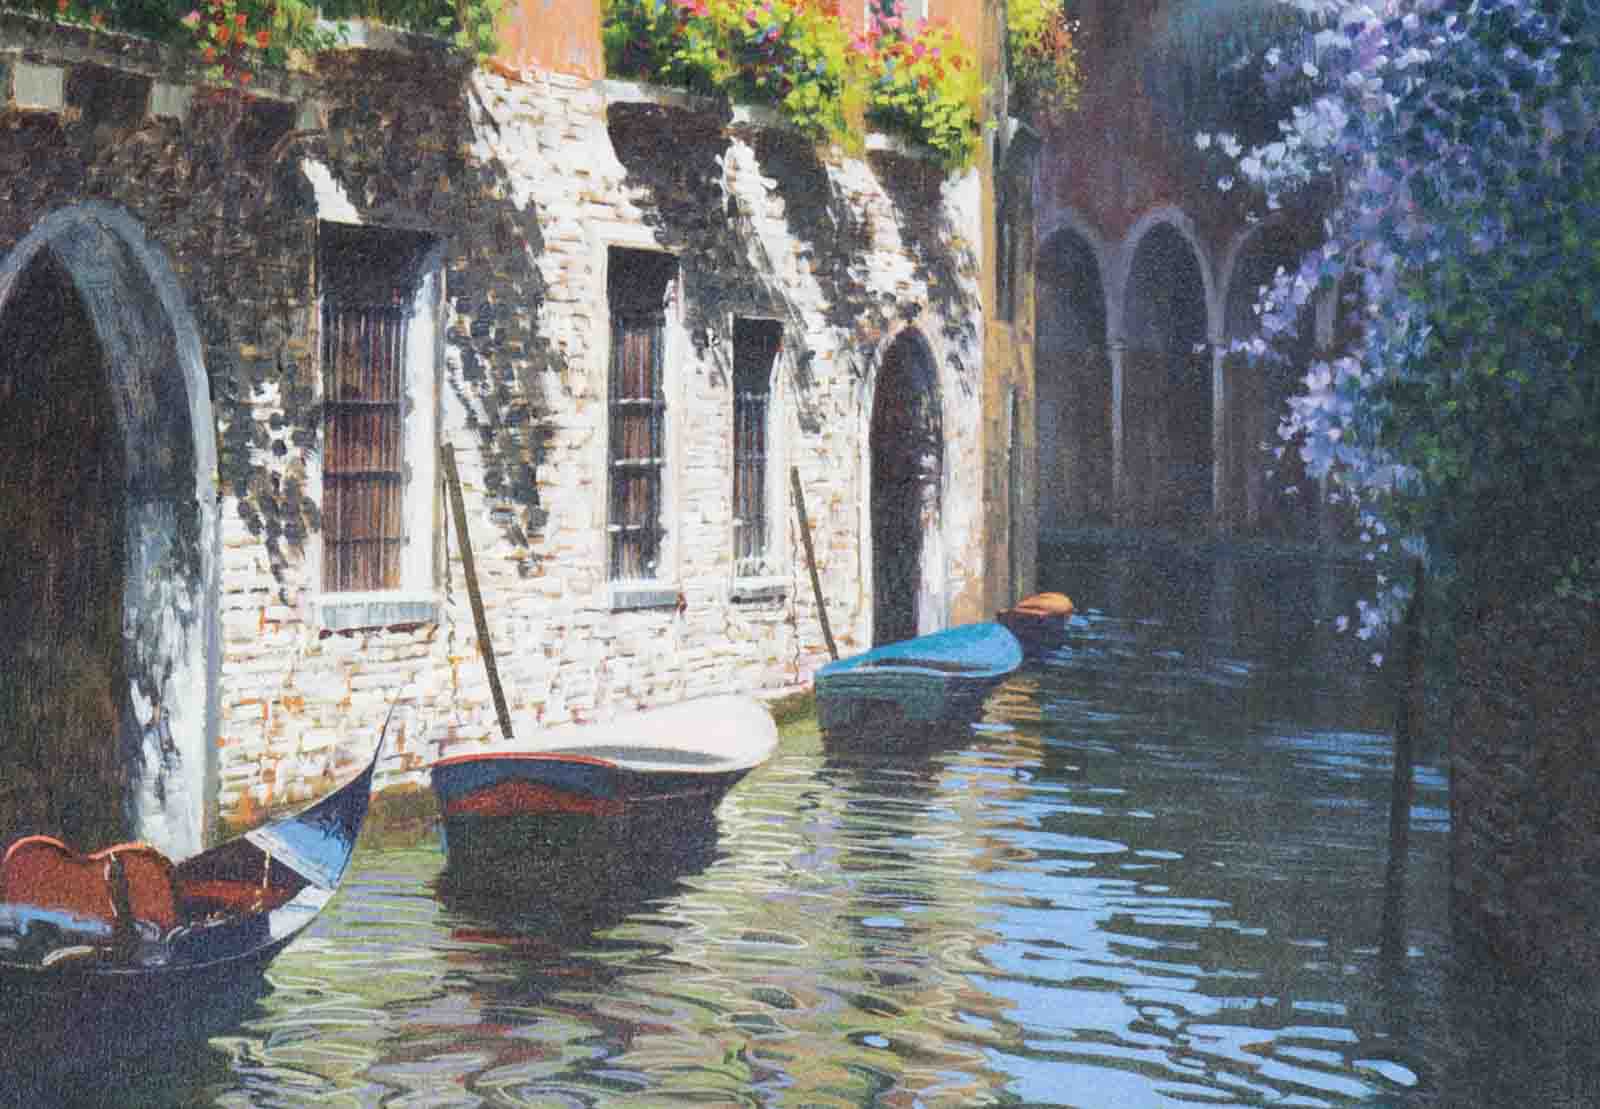 Reflections, Venice